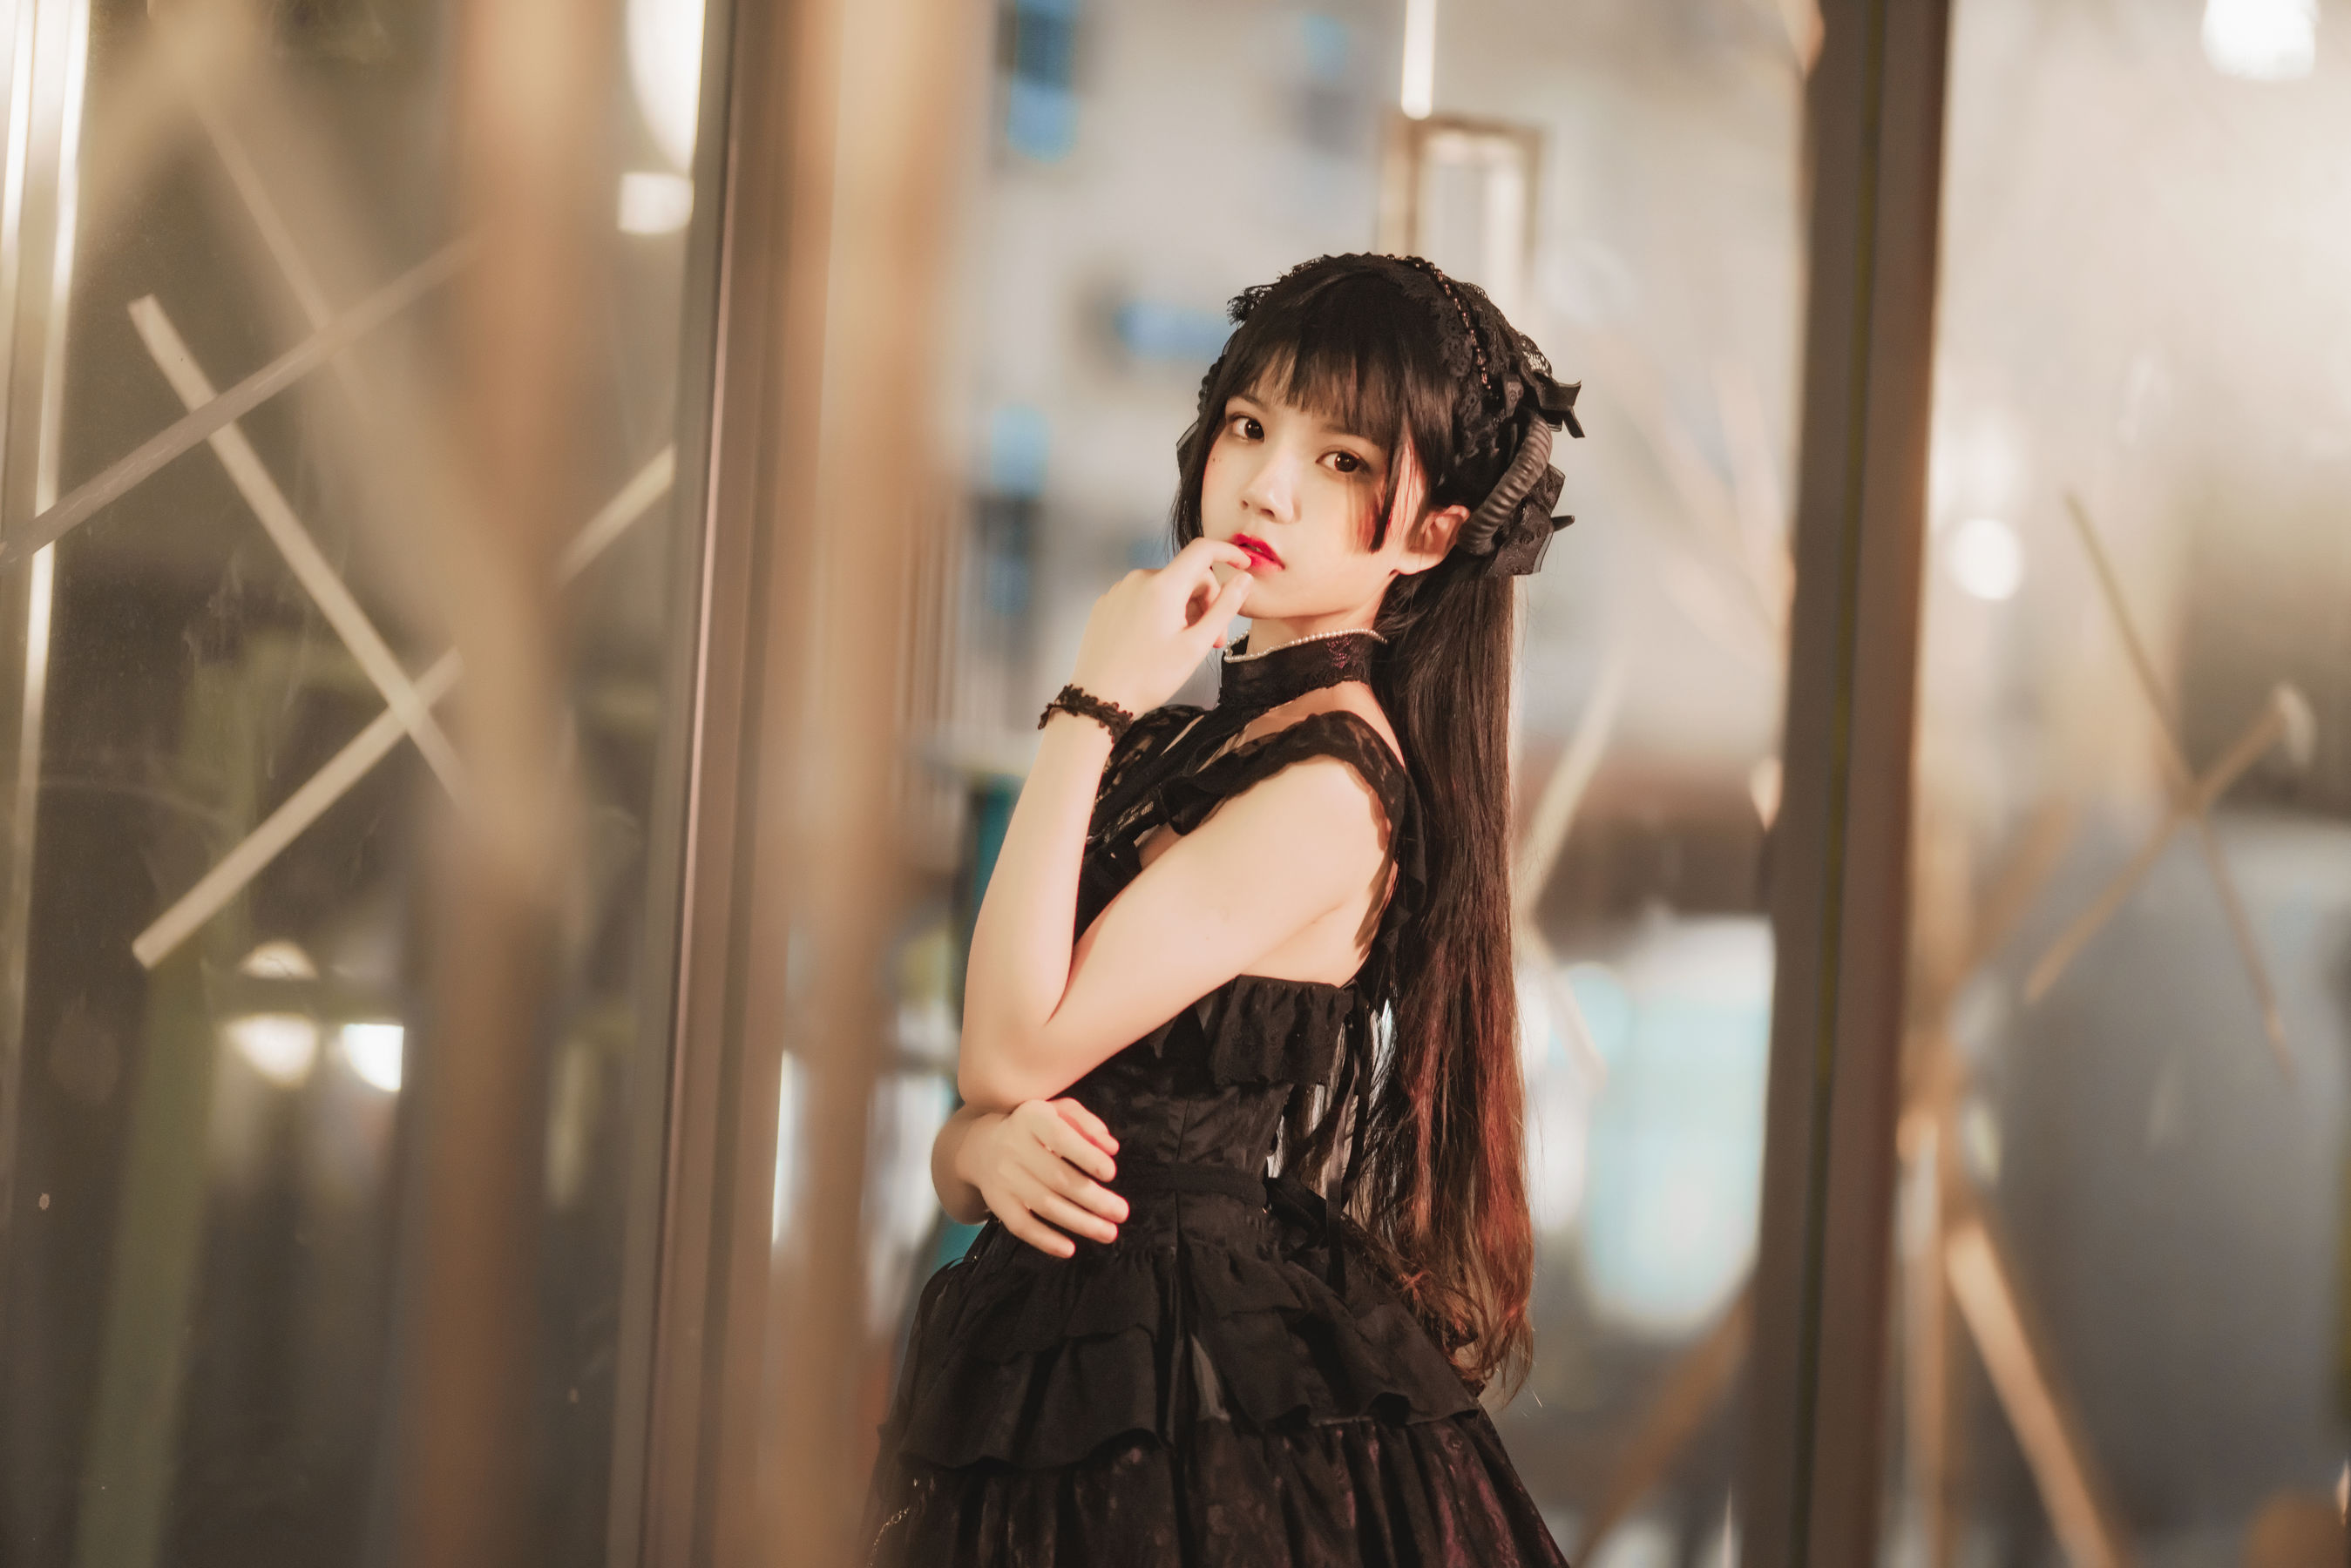 Cherryneko Women Model Asian Long Hair Dark Hair Night Gothic Lolita Black Dress 2698x1800